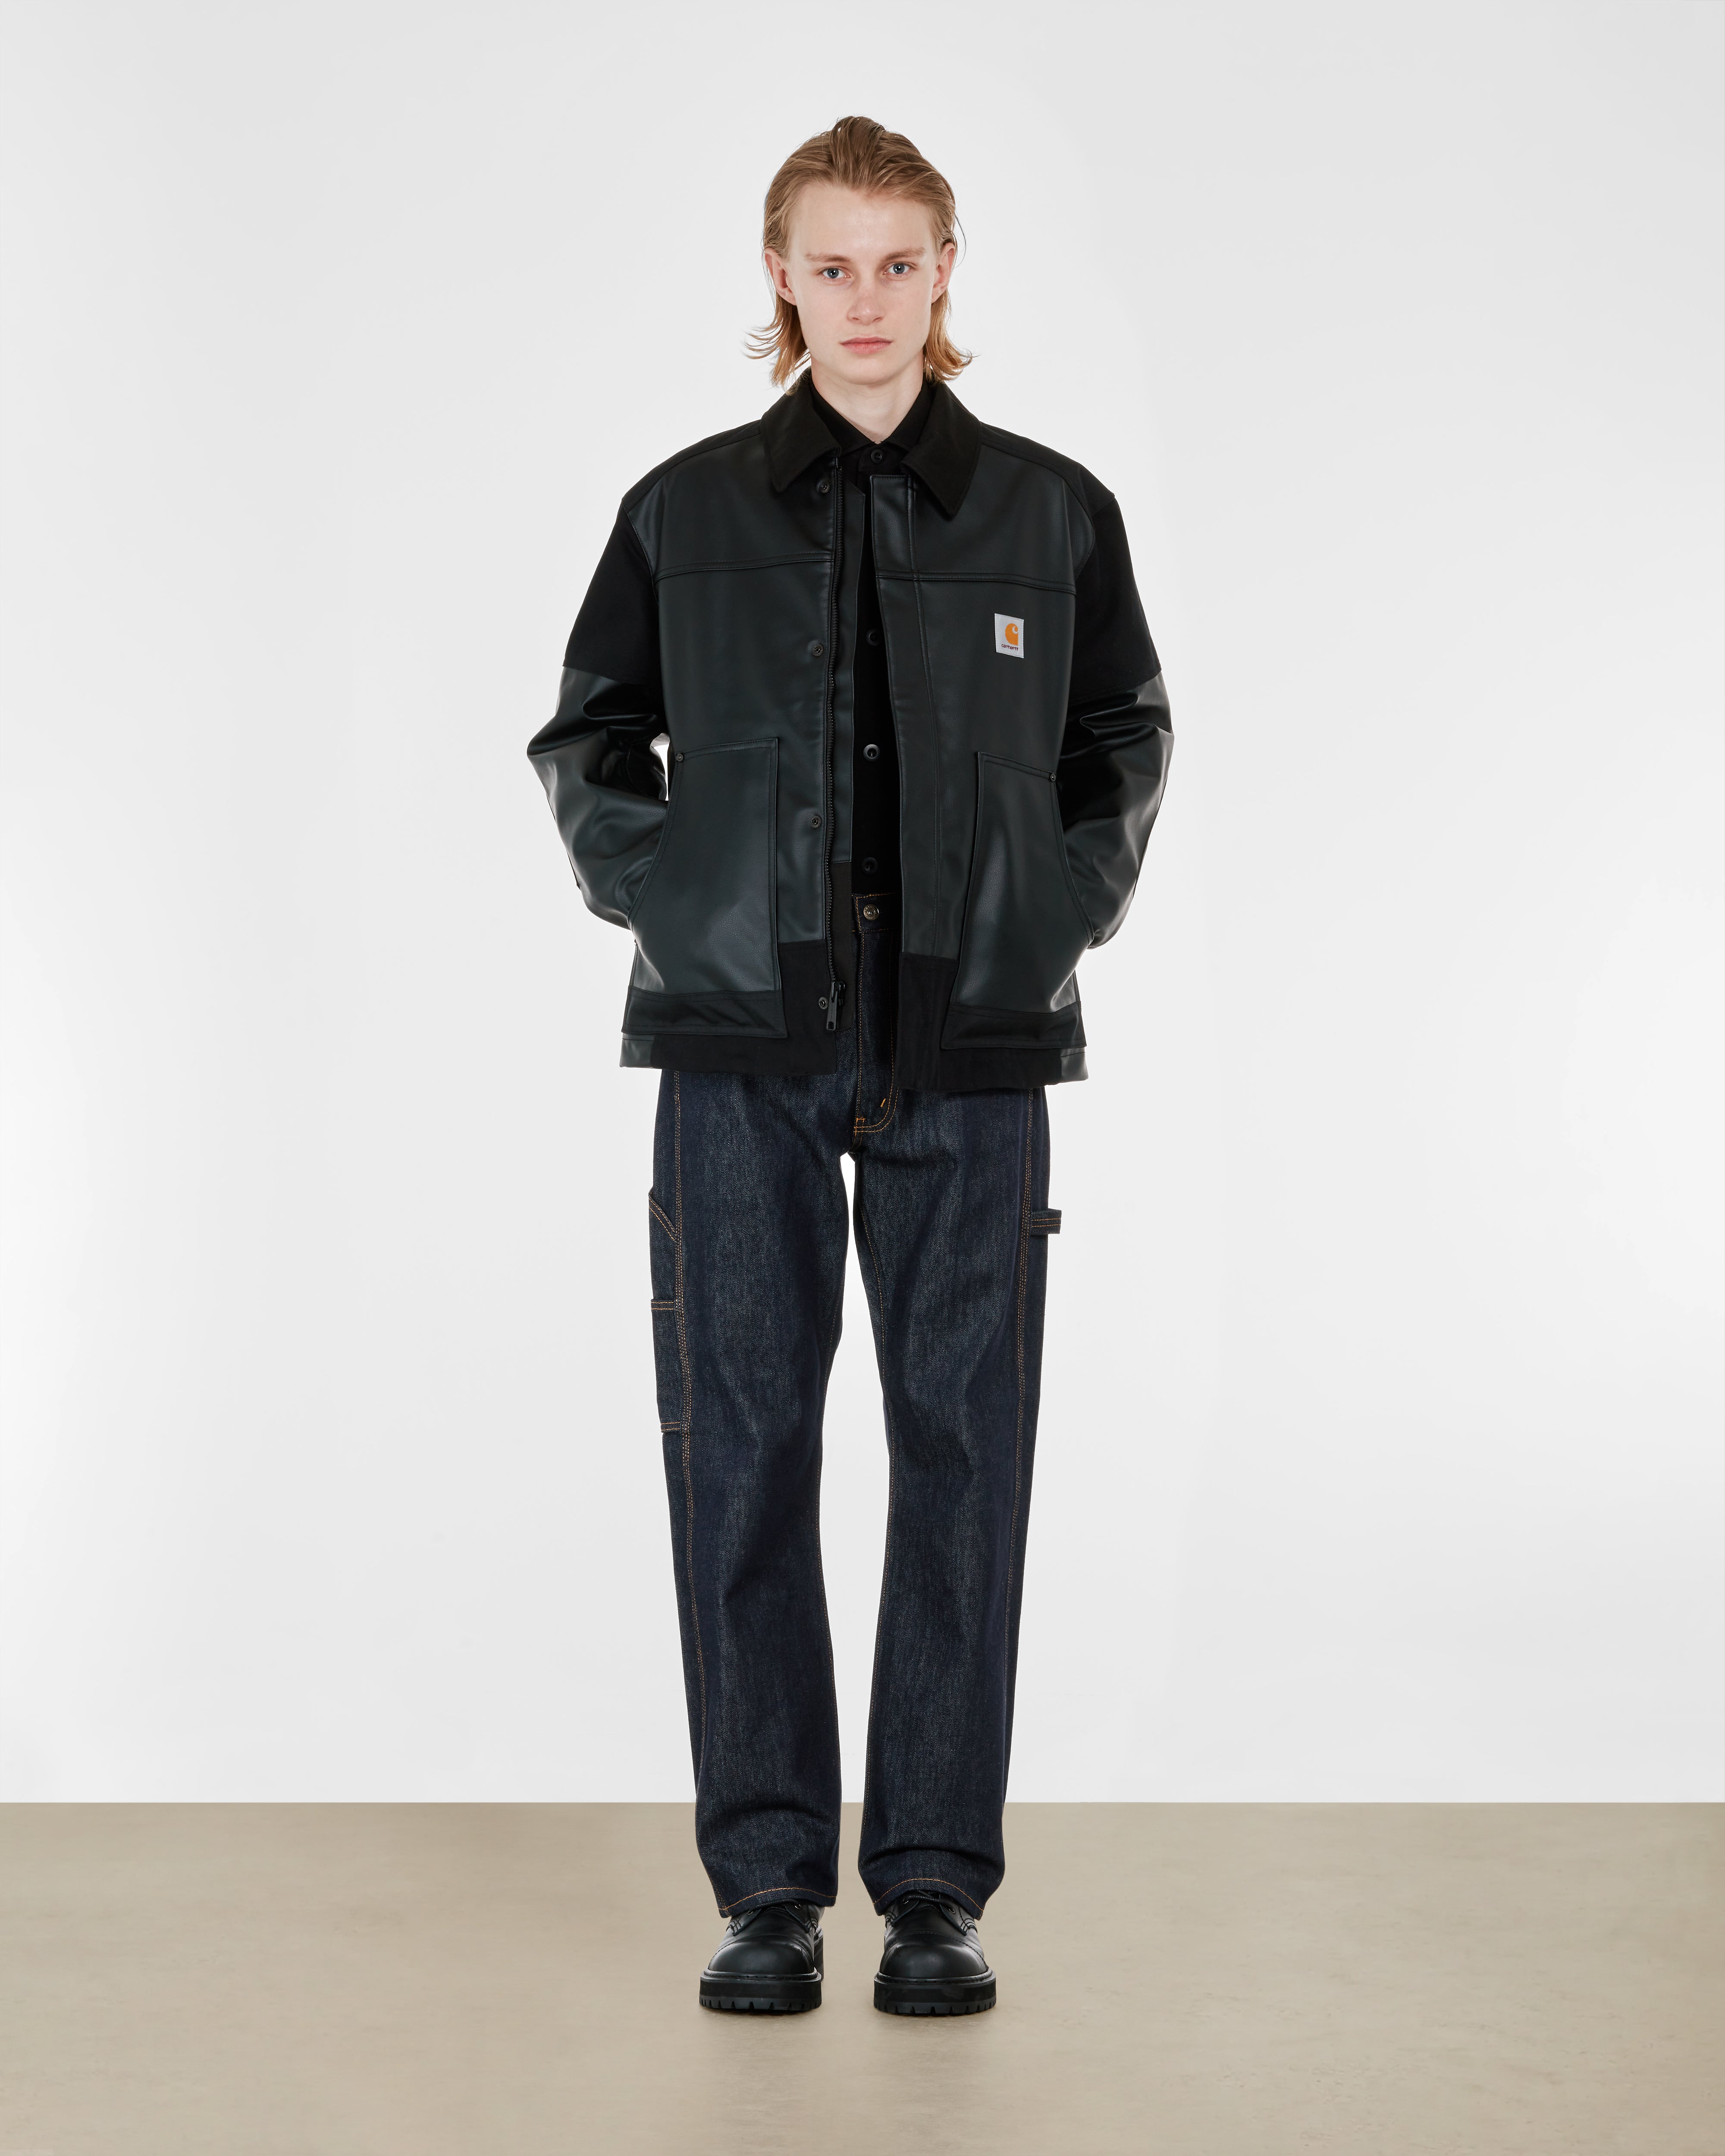 eYe Junya Watanabe MAN - Carhartt Synthetic Leather Jacket - (Black)